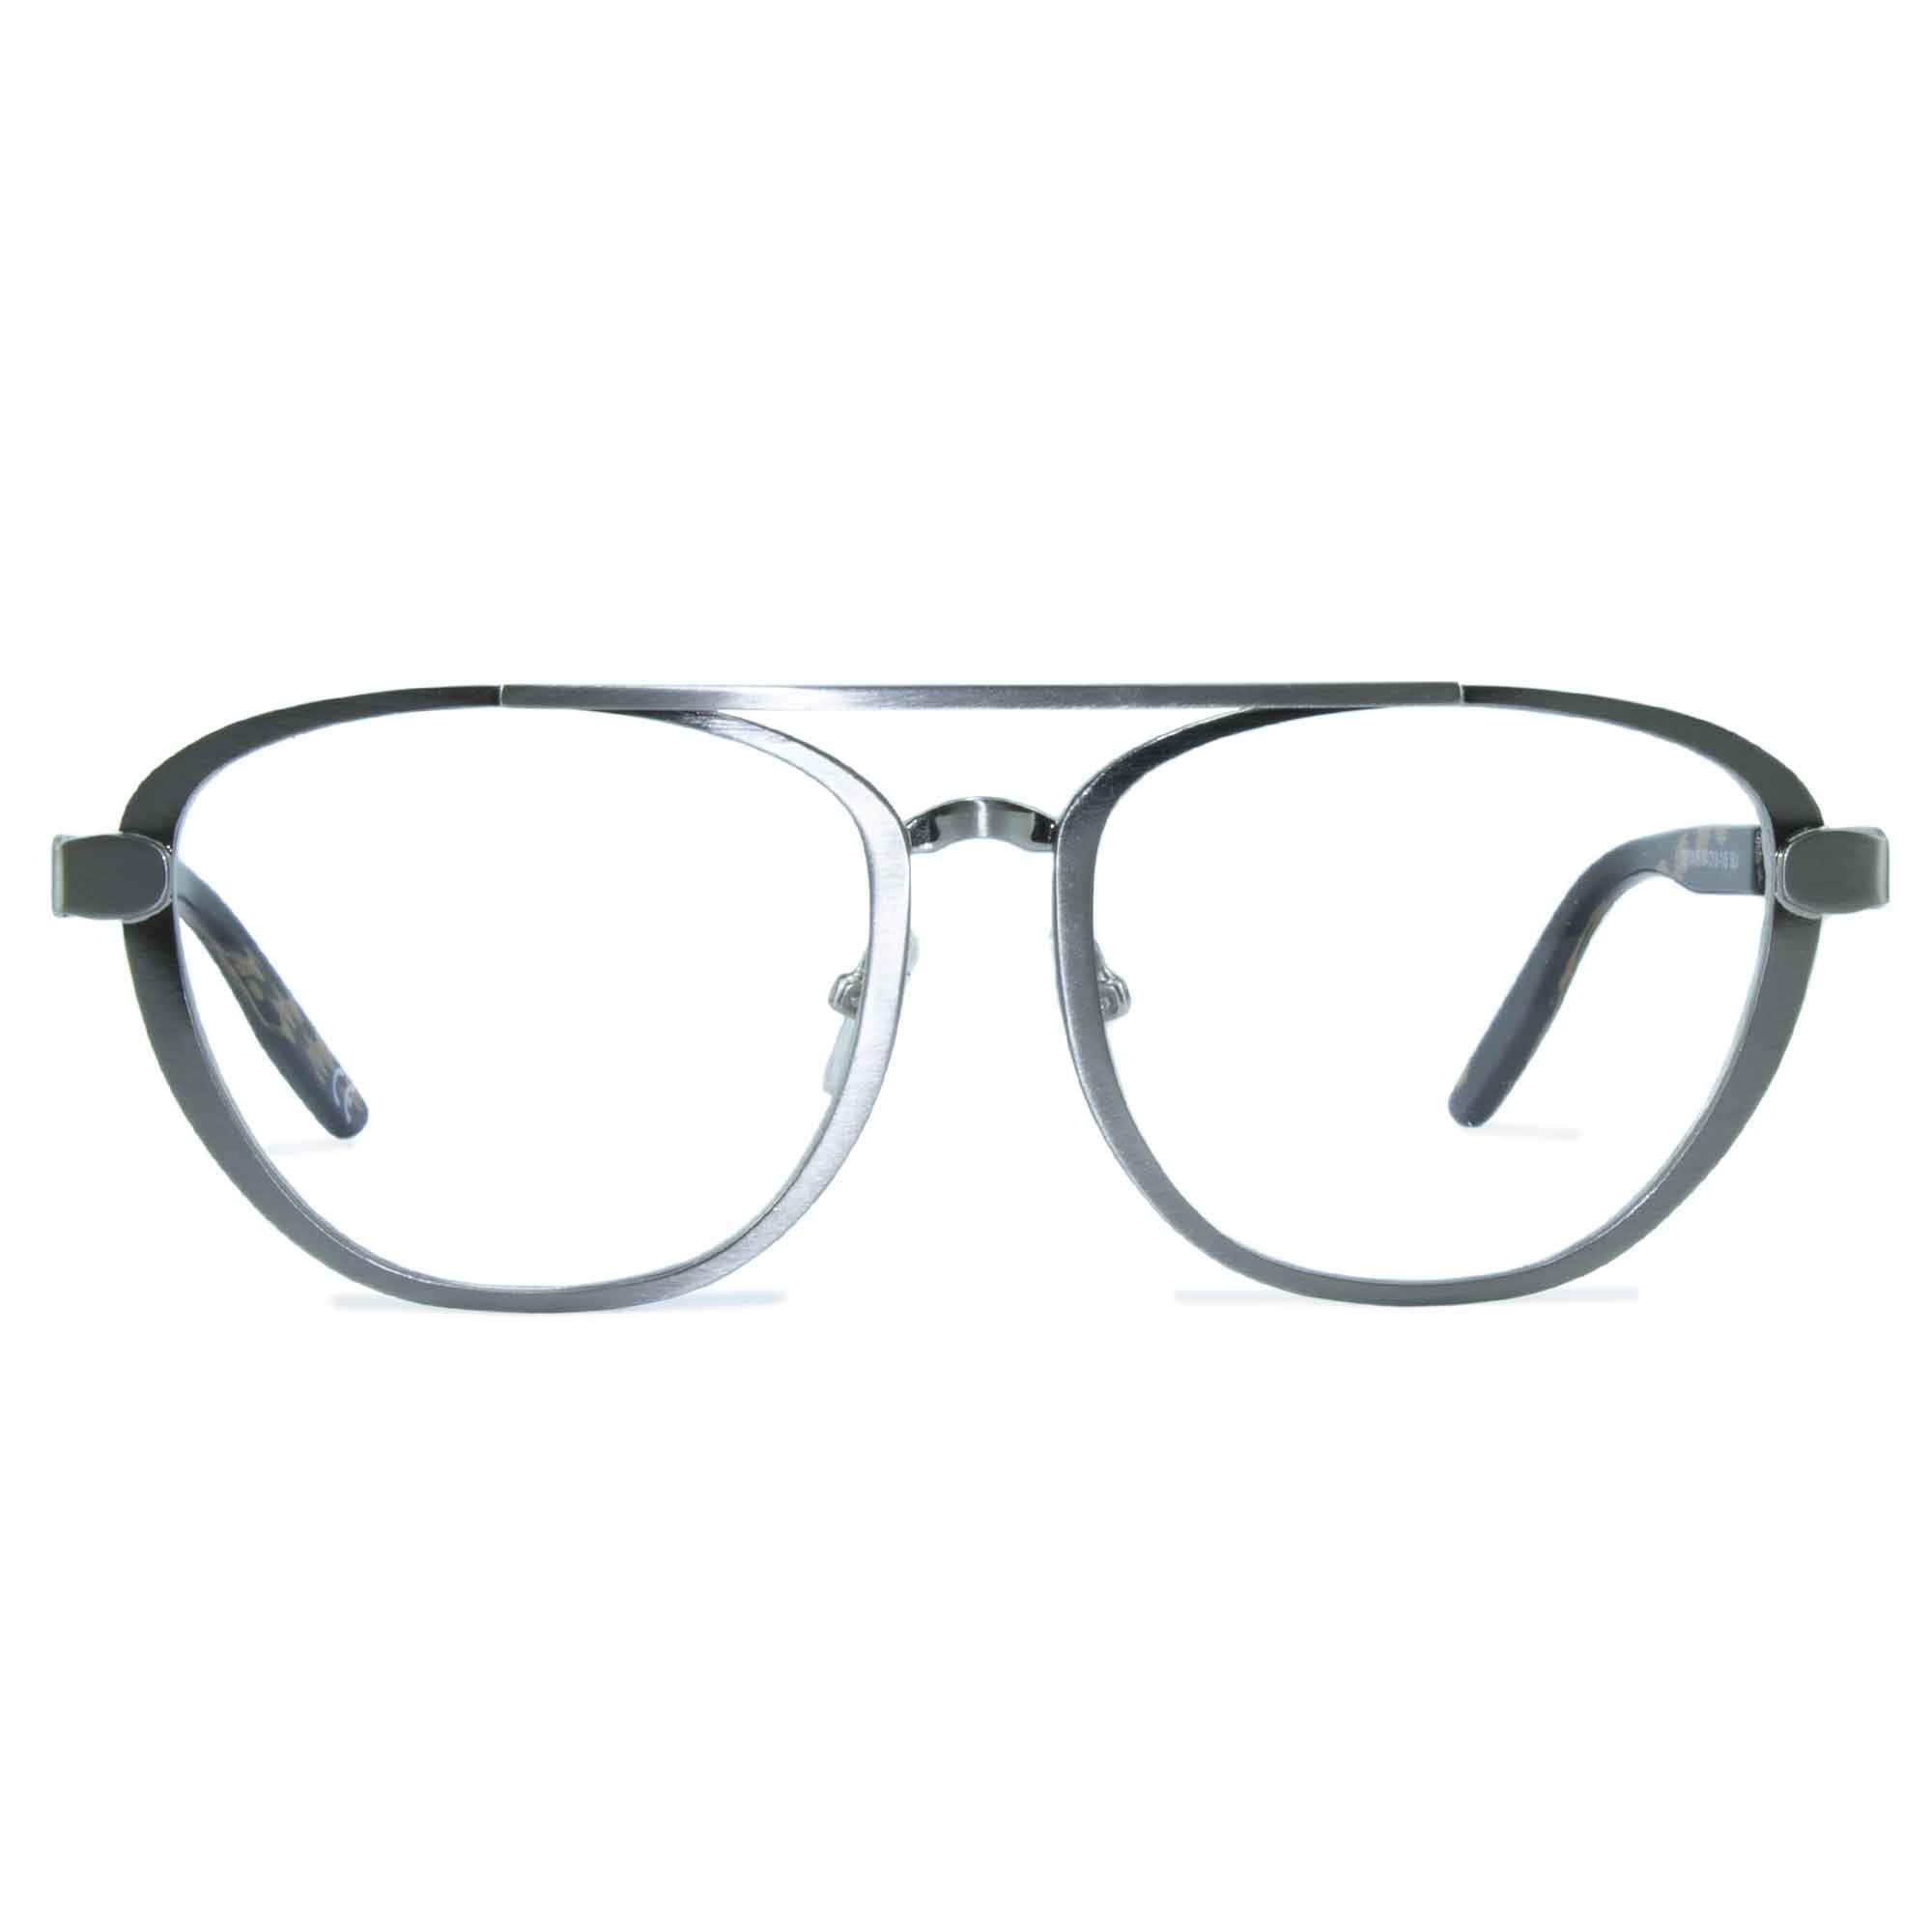 silver aviator glasses